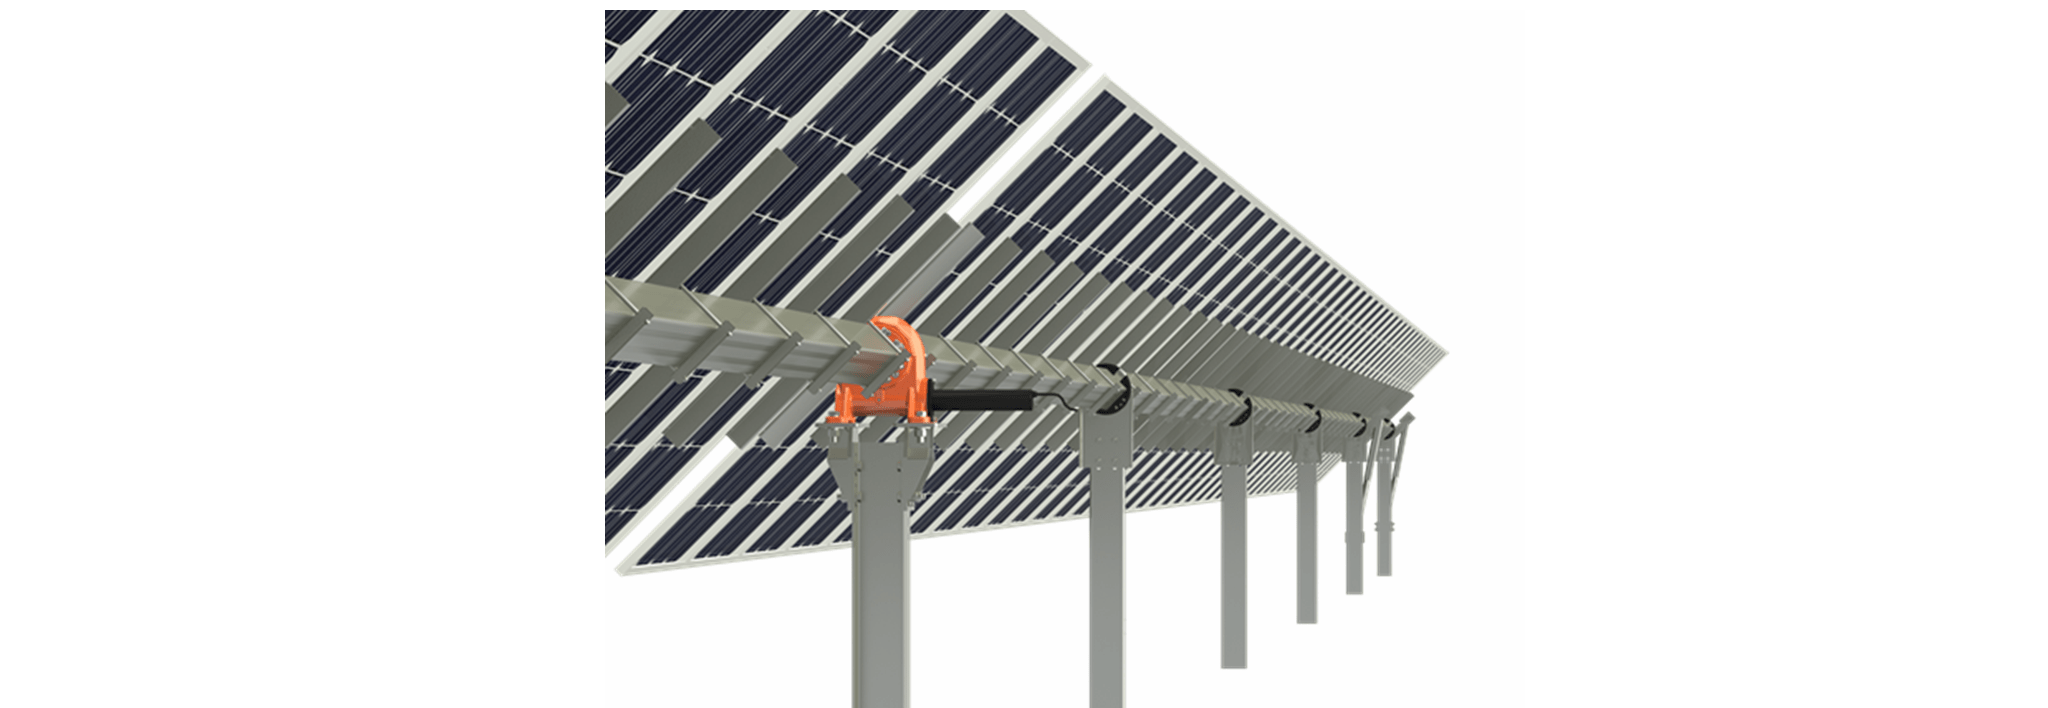 Clenergy Eztracker D1p Solar Tracking System Product Image 1